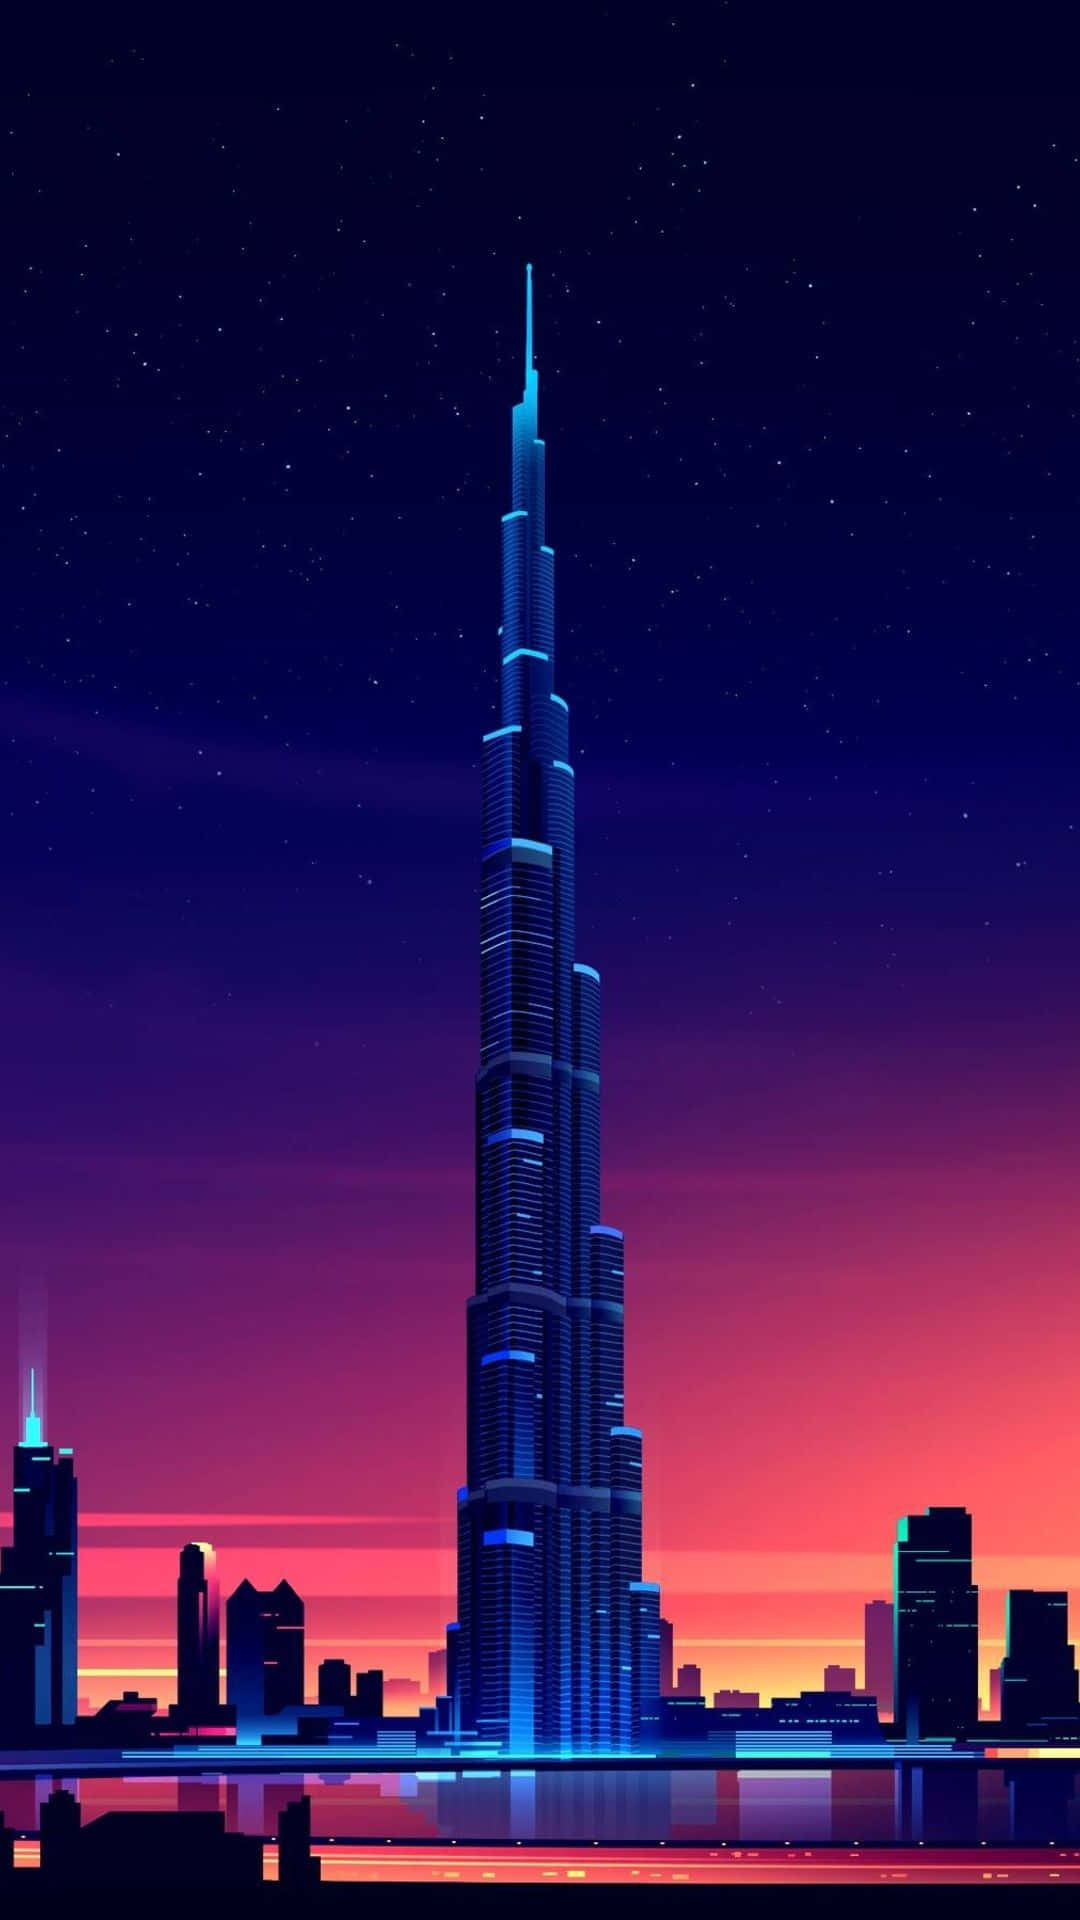 "an Enchanting Evening View Of The Iconic Burj Khalifa"